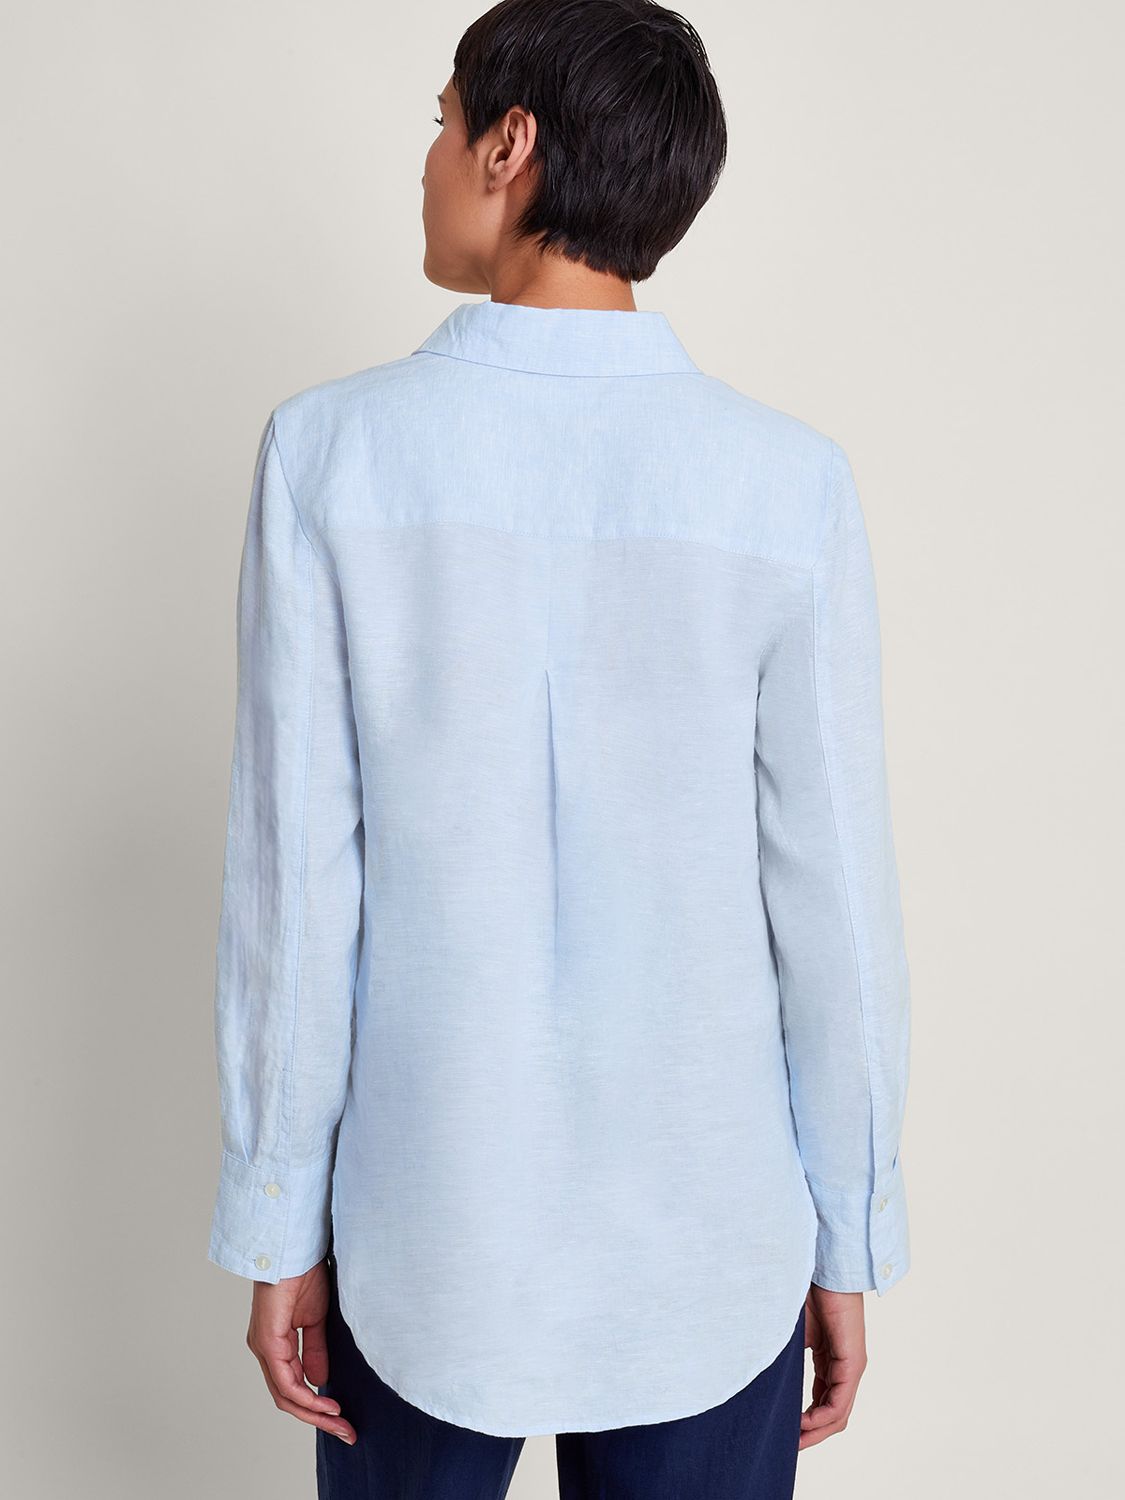 Buy Monsoon Charlie Linen Shirt, Blue Online at johnlewis.com